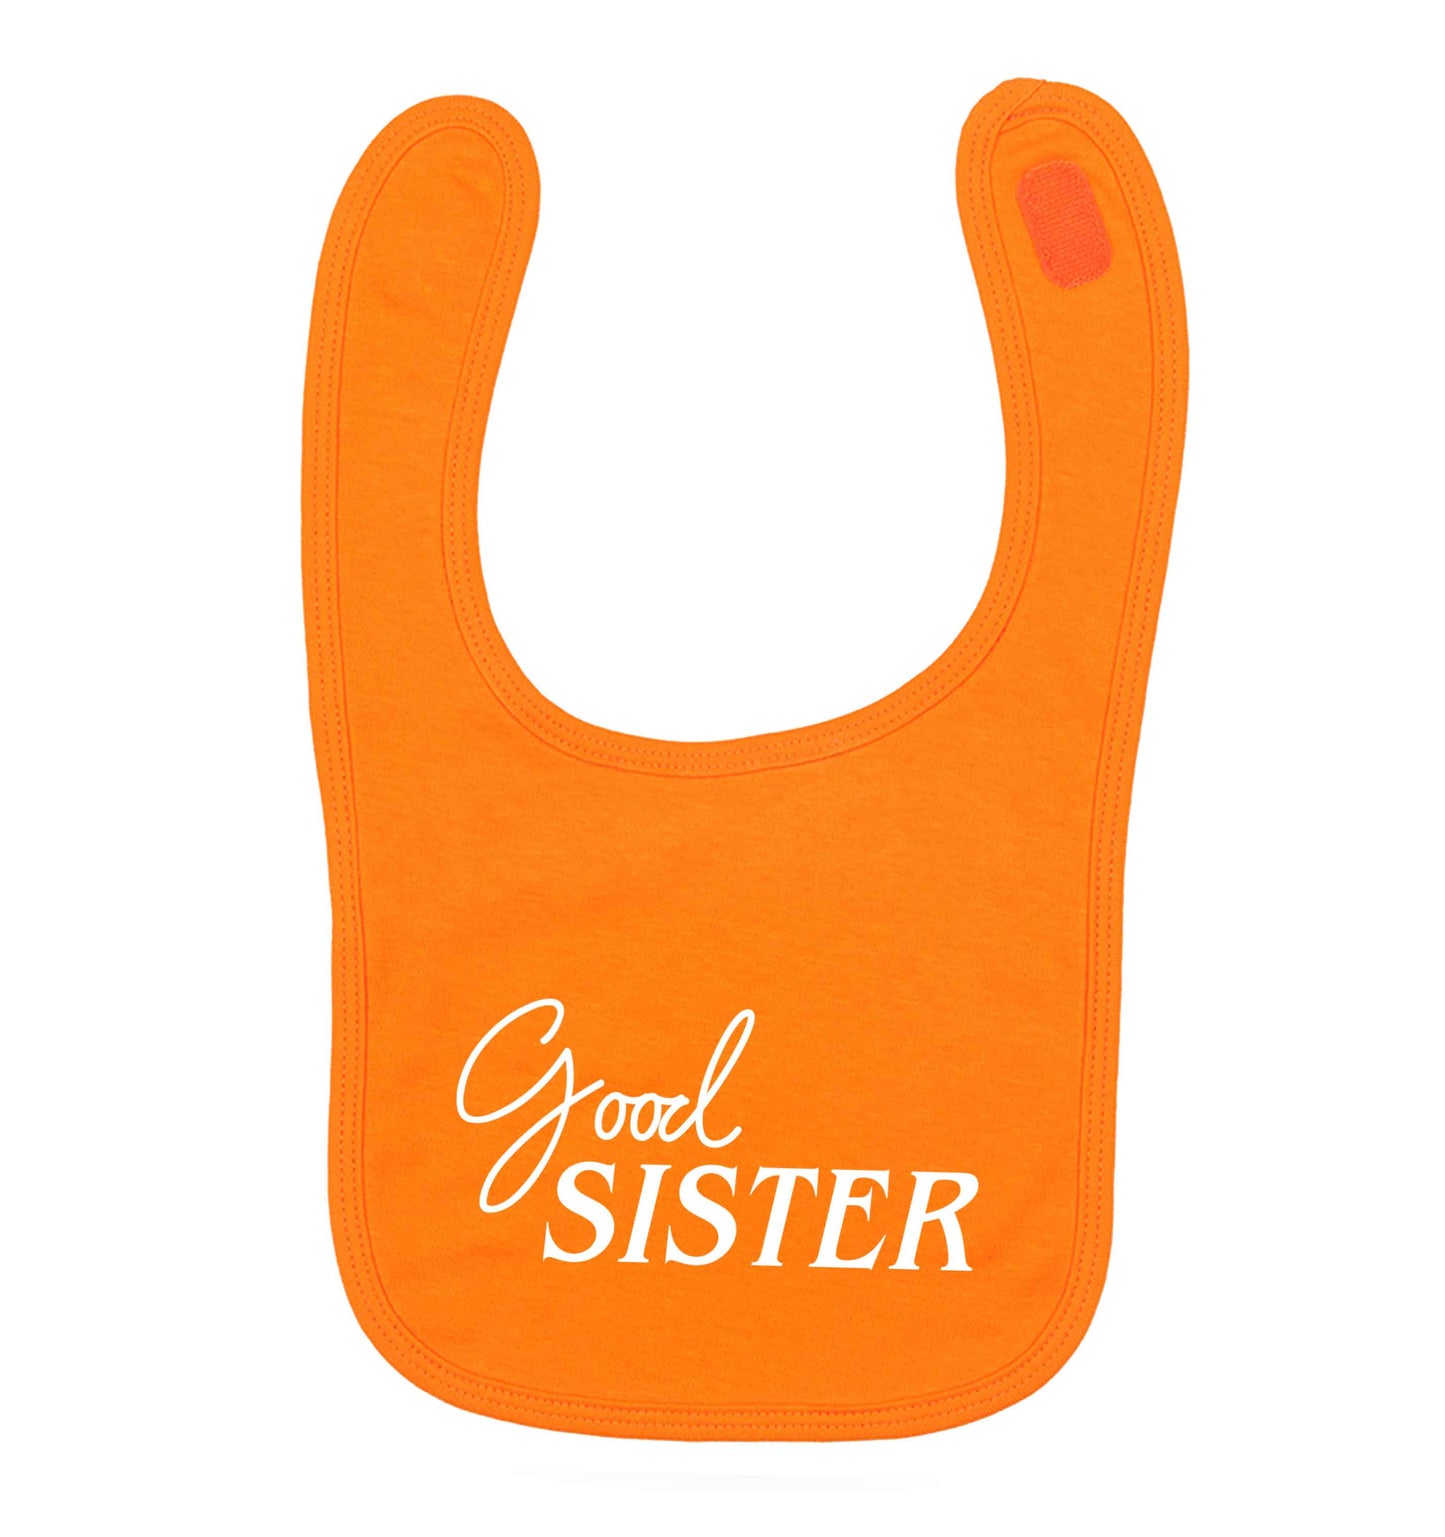 Good sister orange baby bib